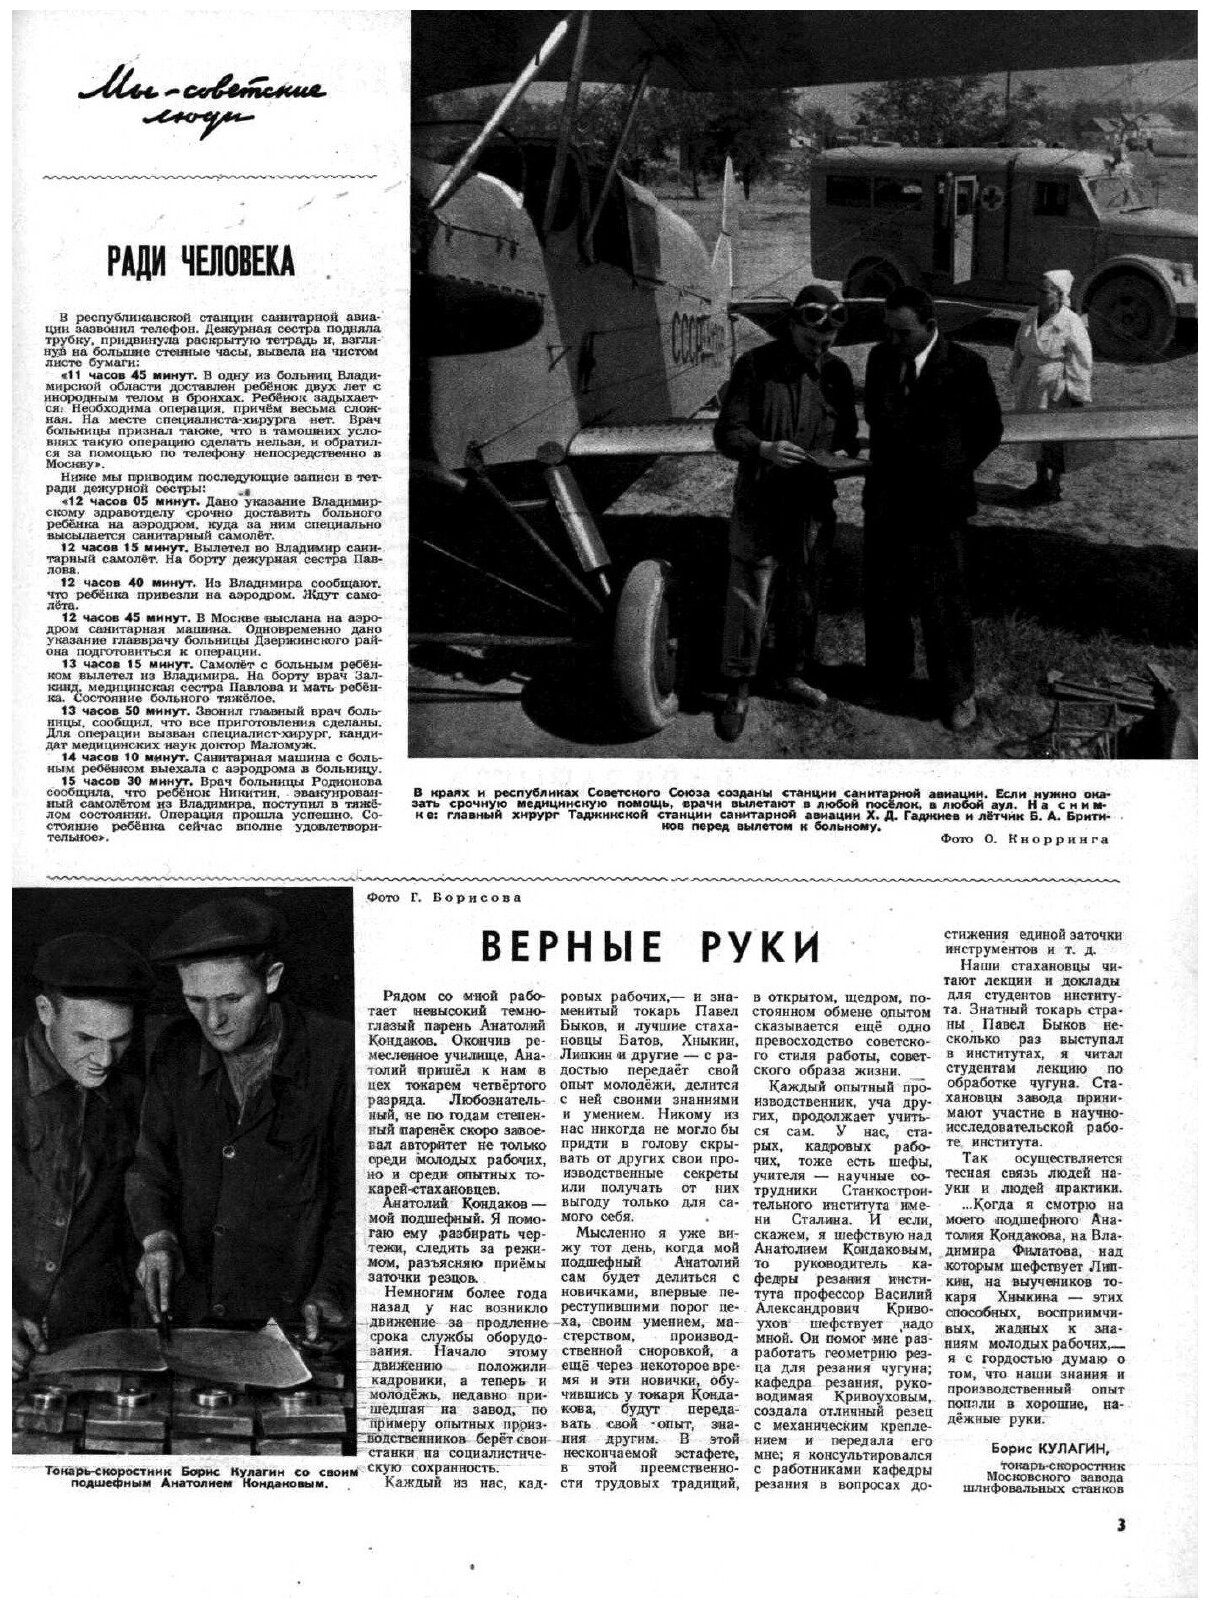 Журнал "Смена". № 21, 1951 - фото №3